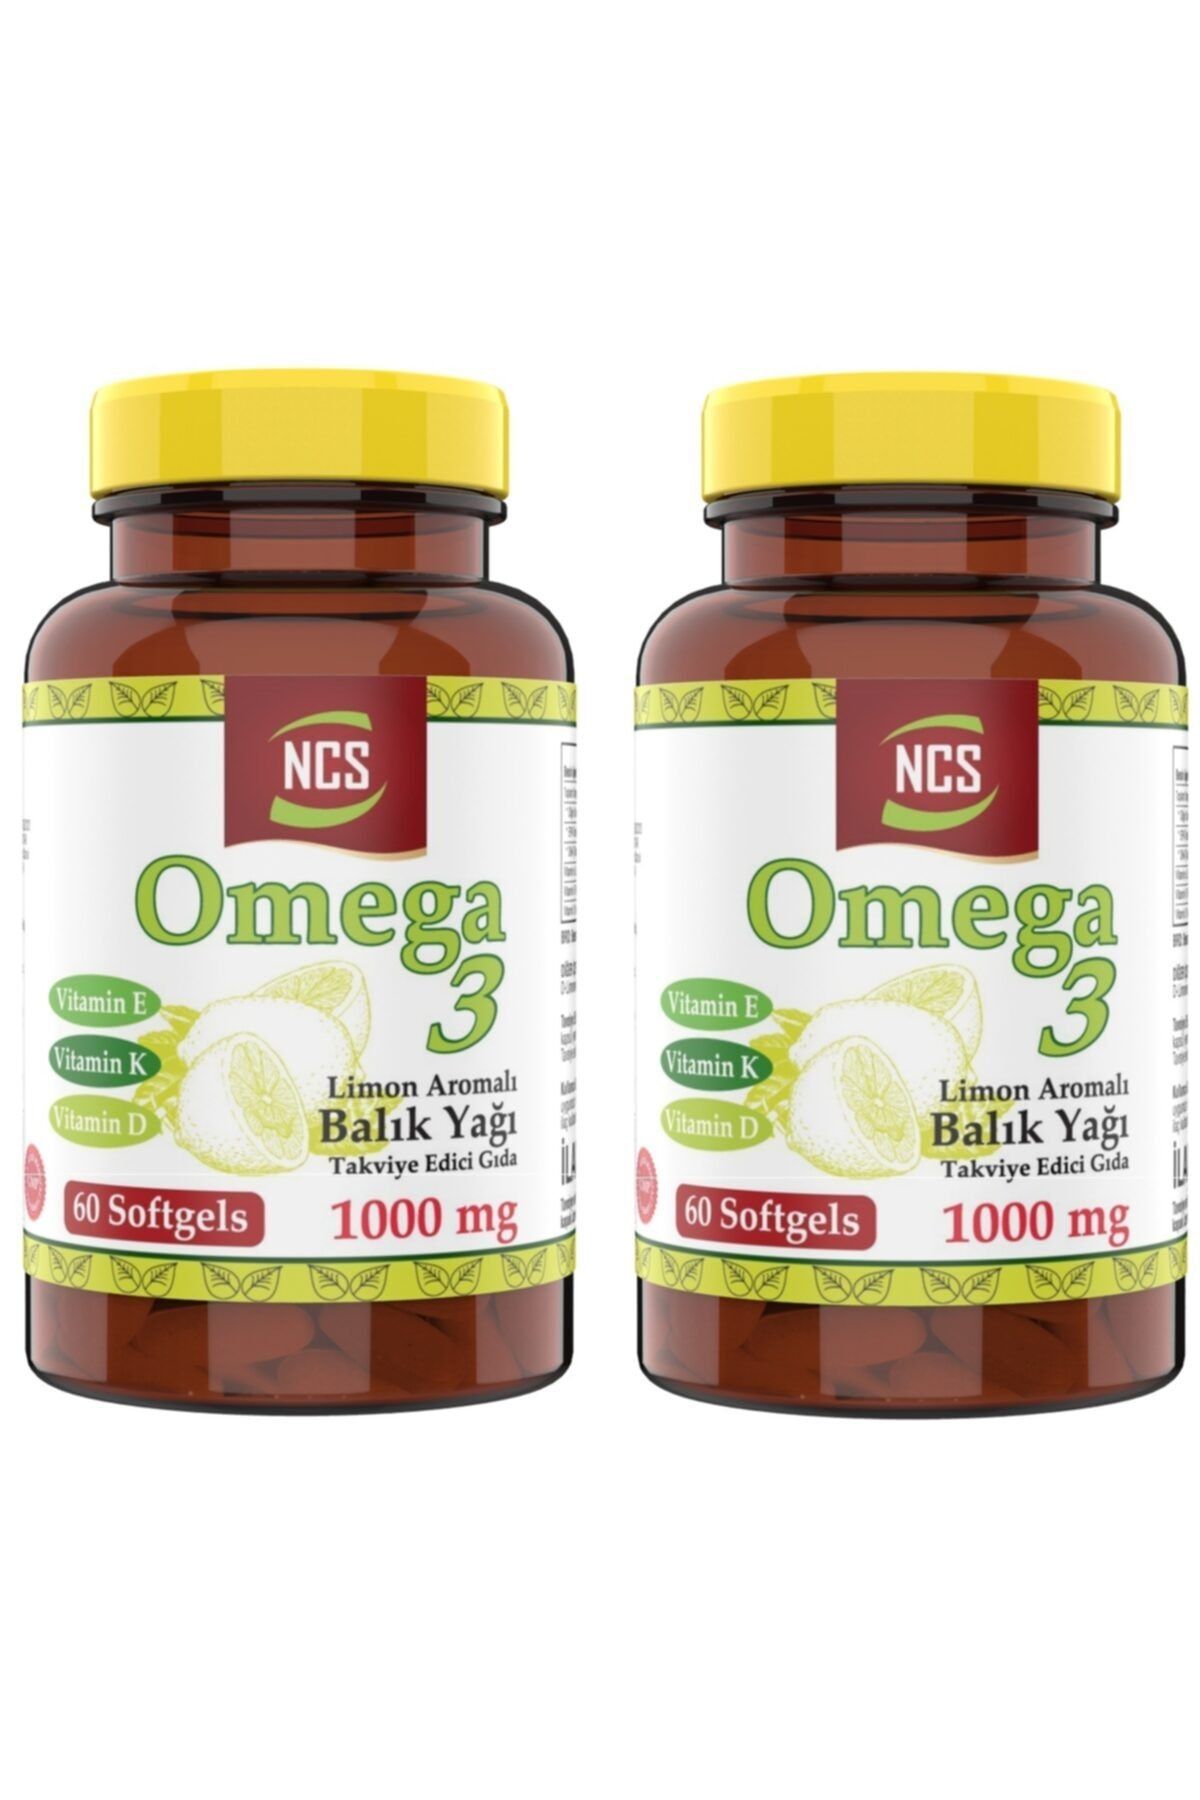 Ncs Omega 3 Balık Yağı 1000mg 2 Kutu 120 Softgel Limon Aromalı